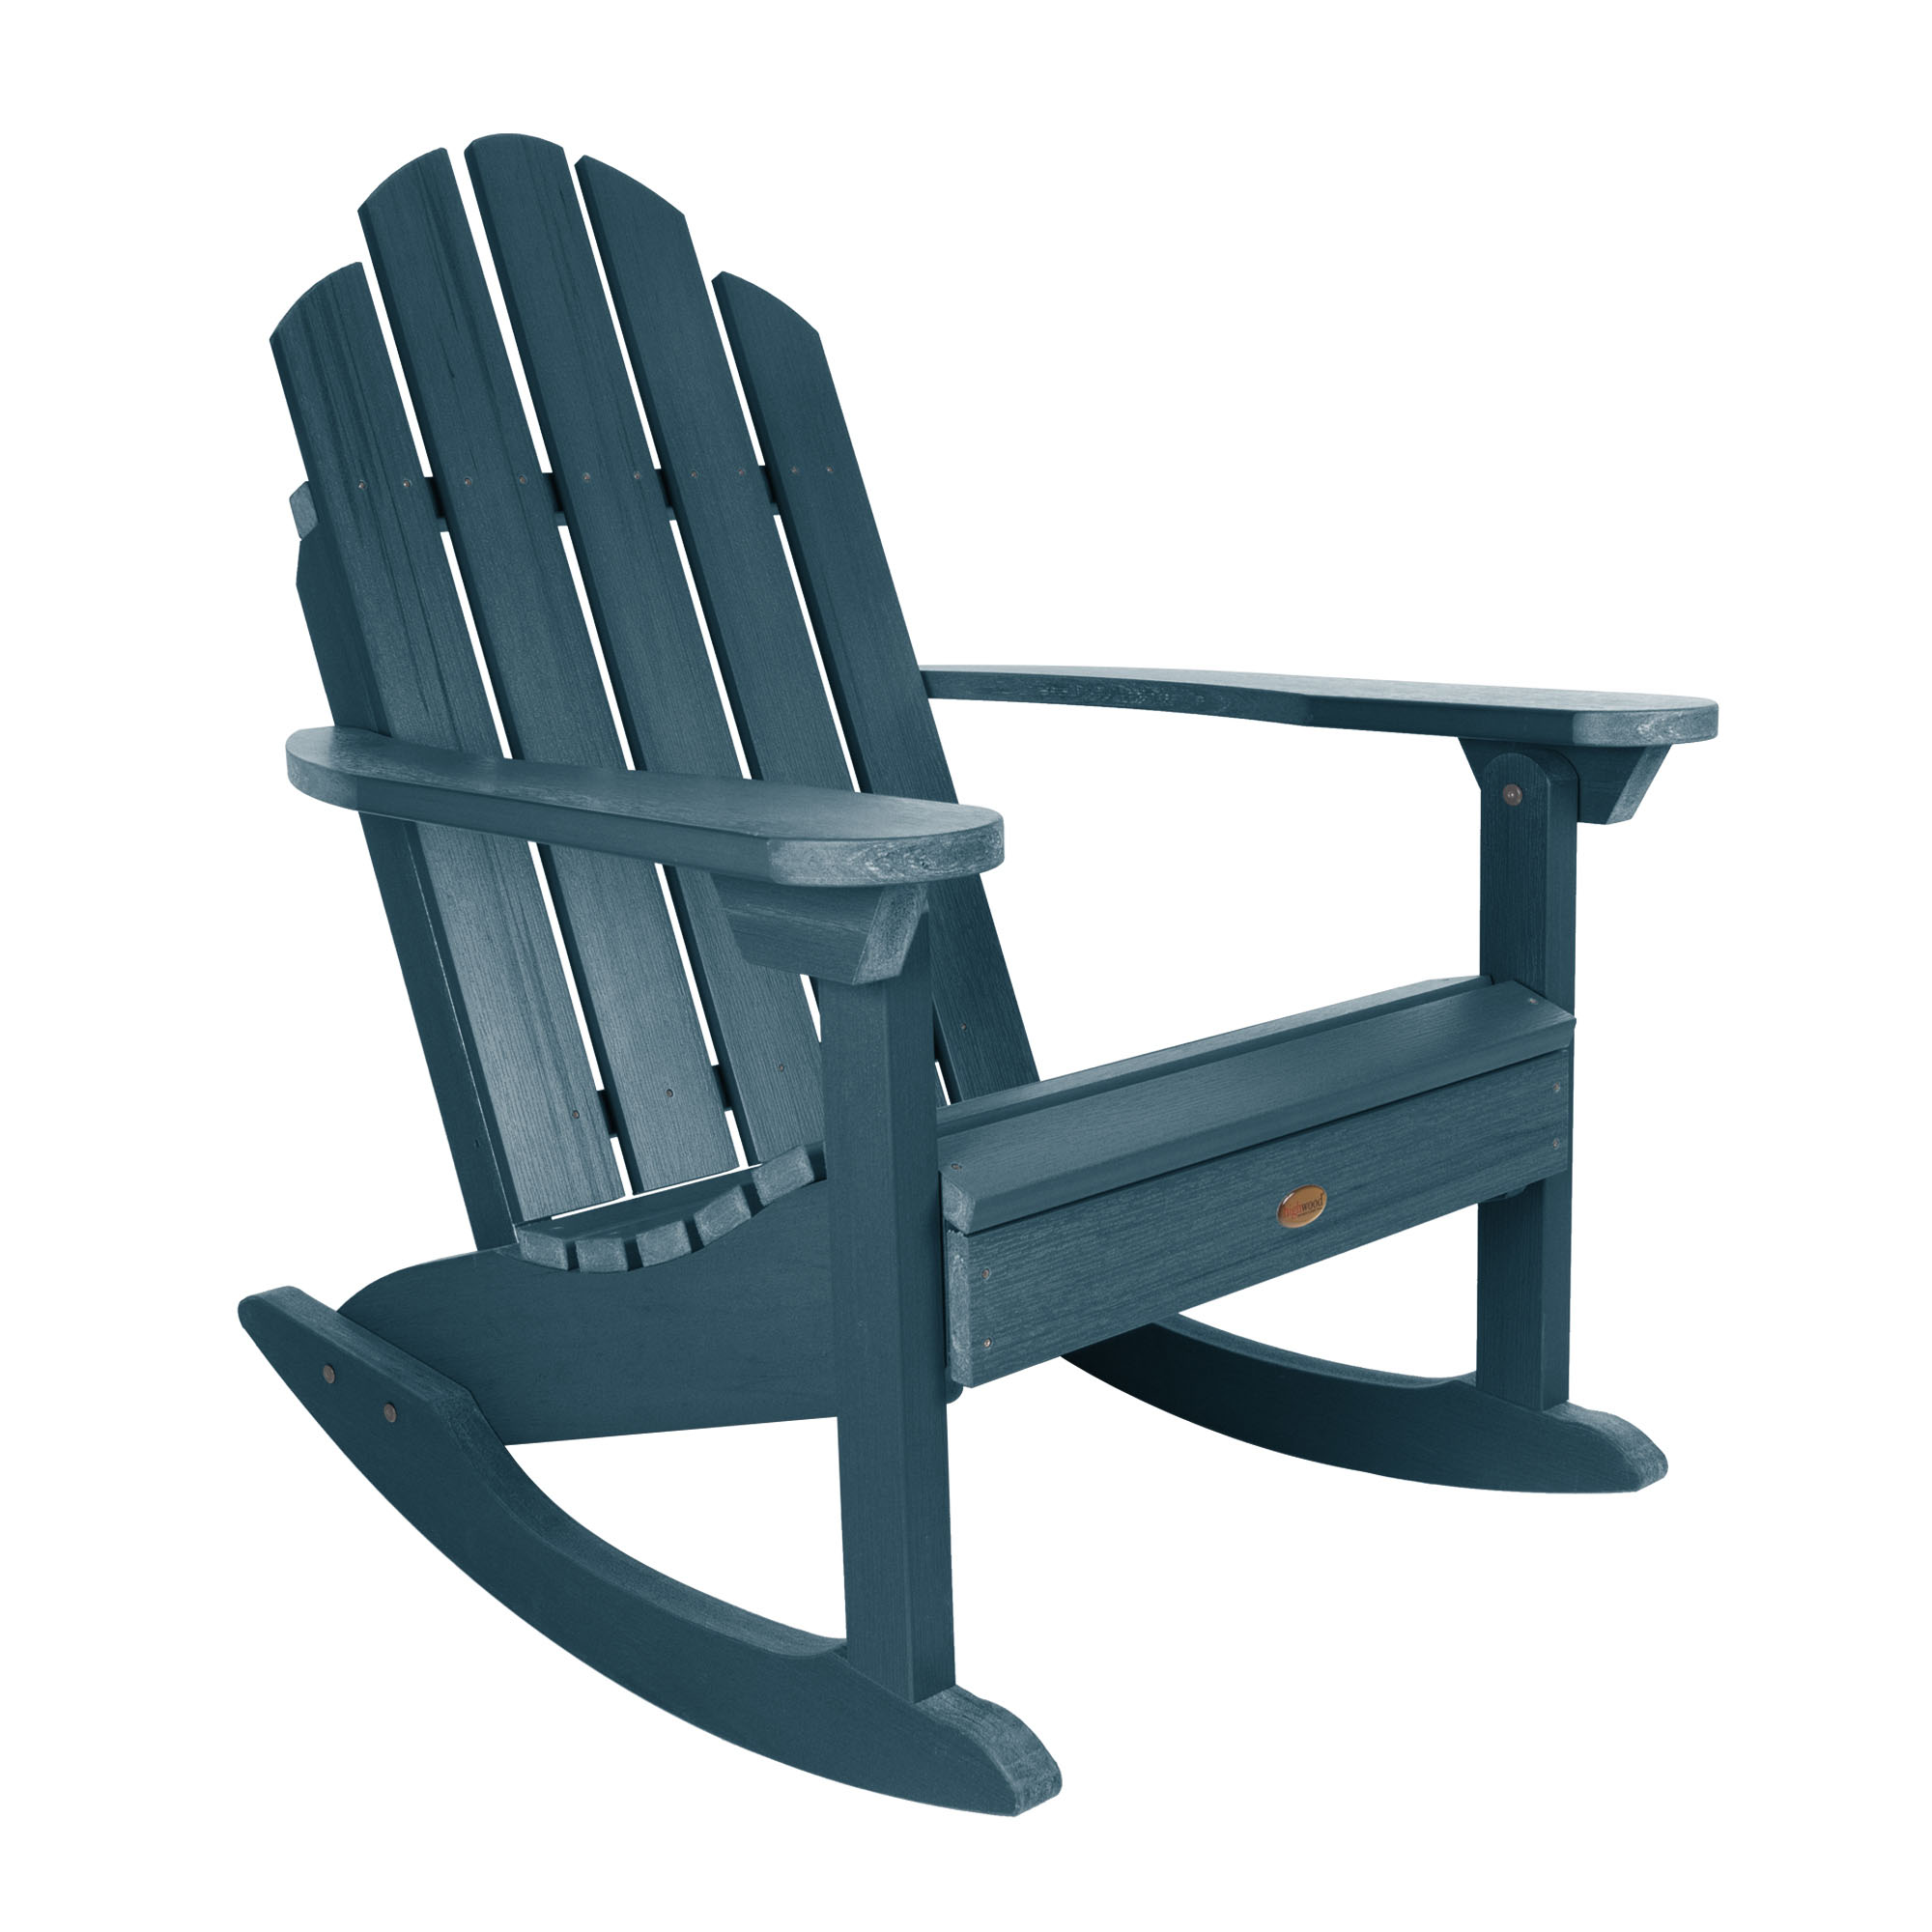 Highwood Classic Westport Adirondack Rocking Chair - image 1 of 2